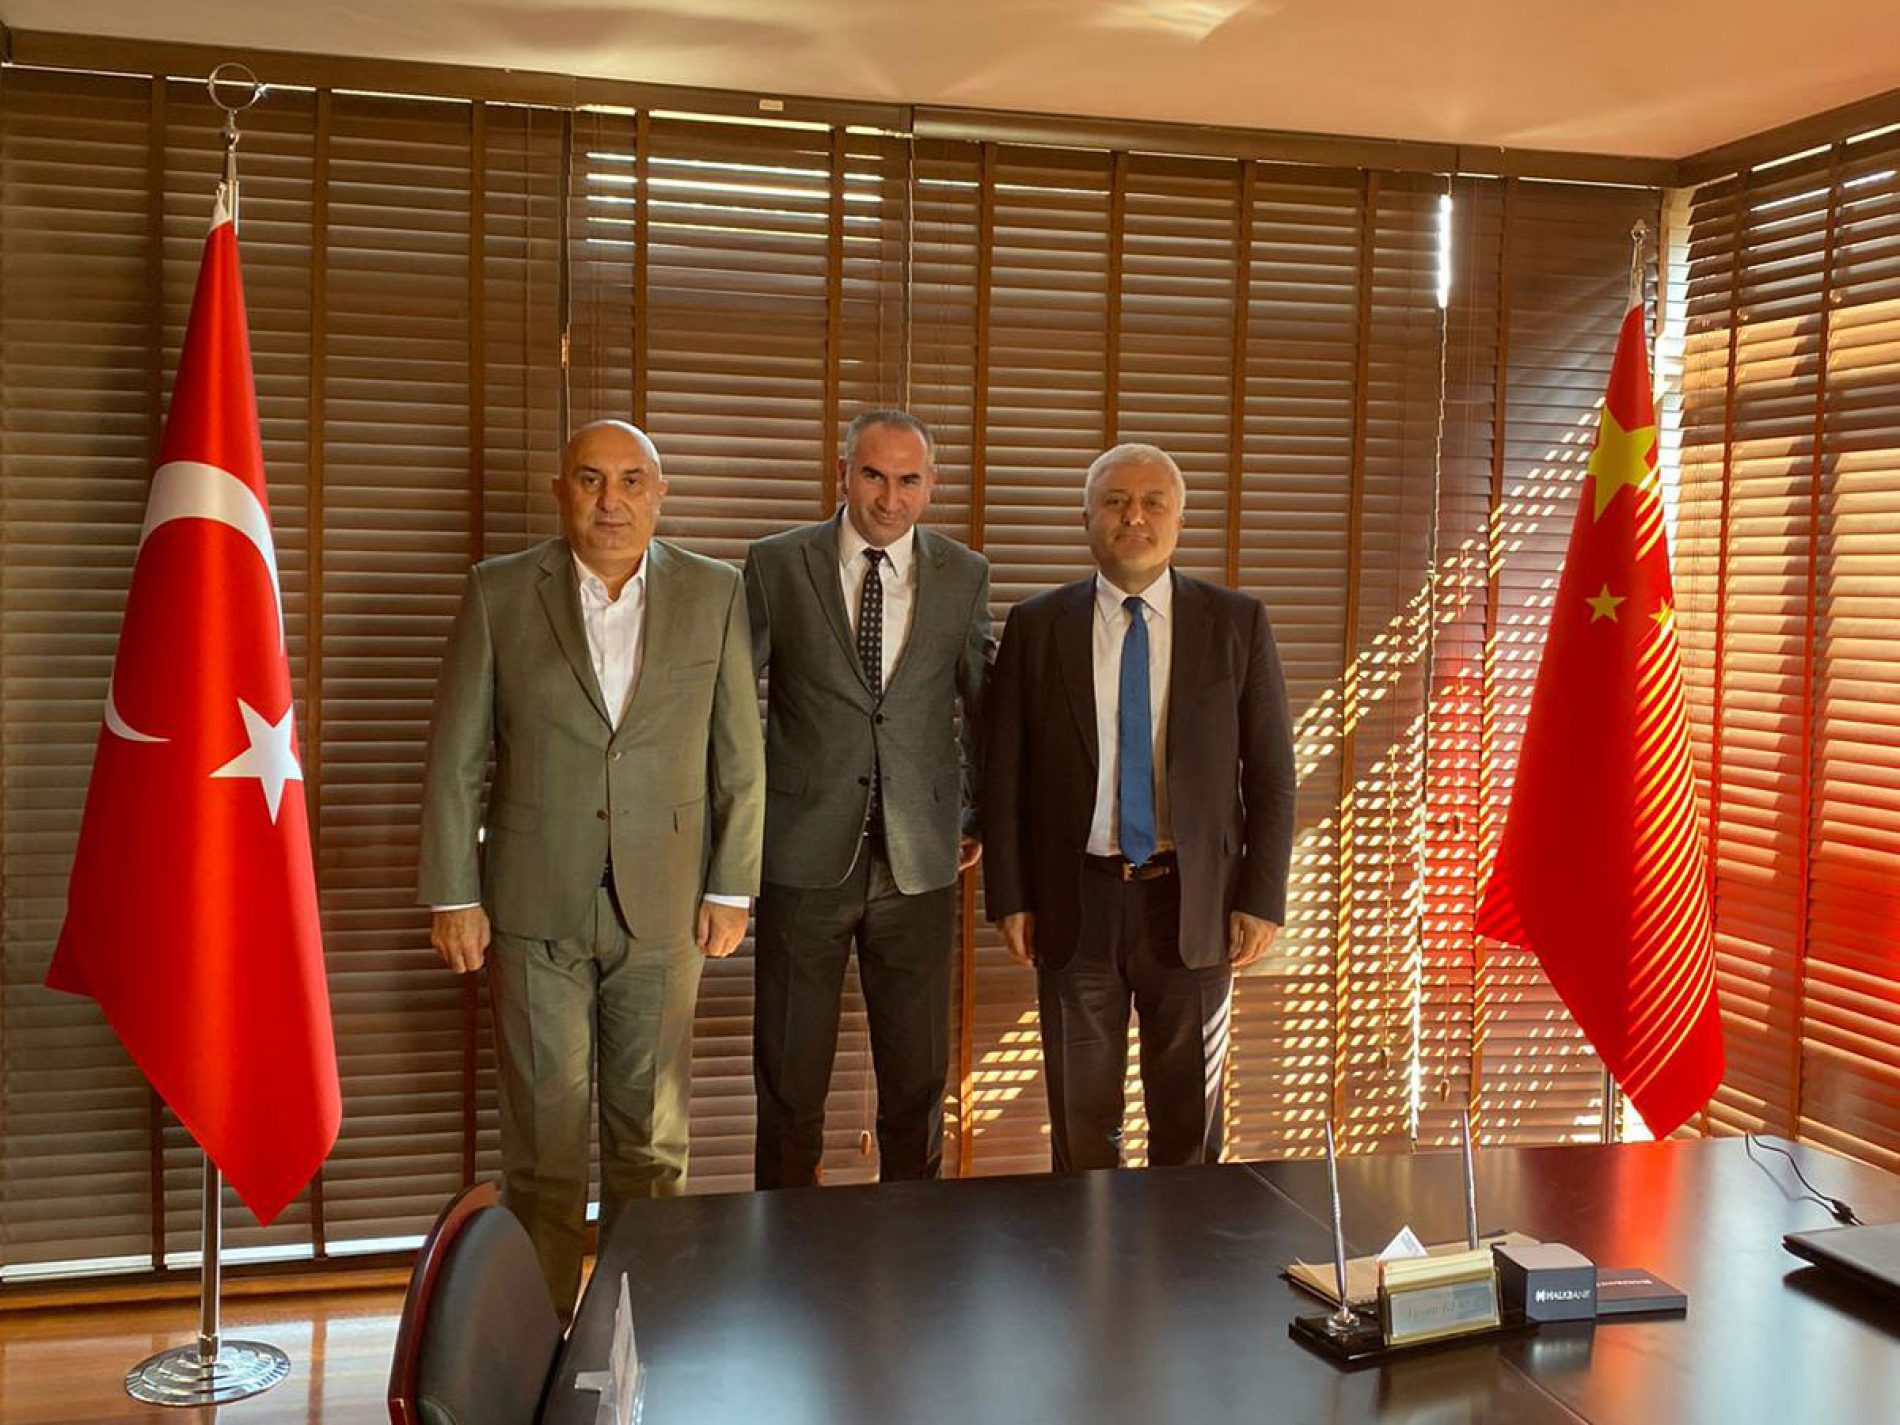 CHP Vice President, Mr. Tuncay ÖZKAN and Group Deputy Chairman, Mr. Engin ÖZKOÇ visited our Board Chairman, Mr. İhsan BEŞER